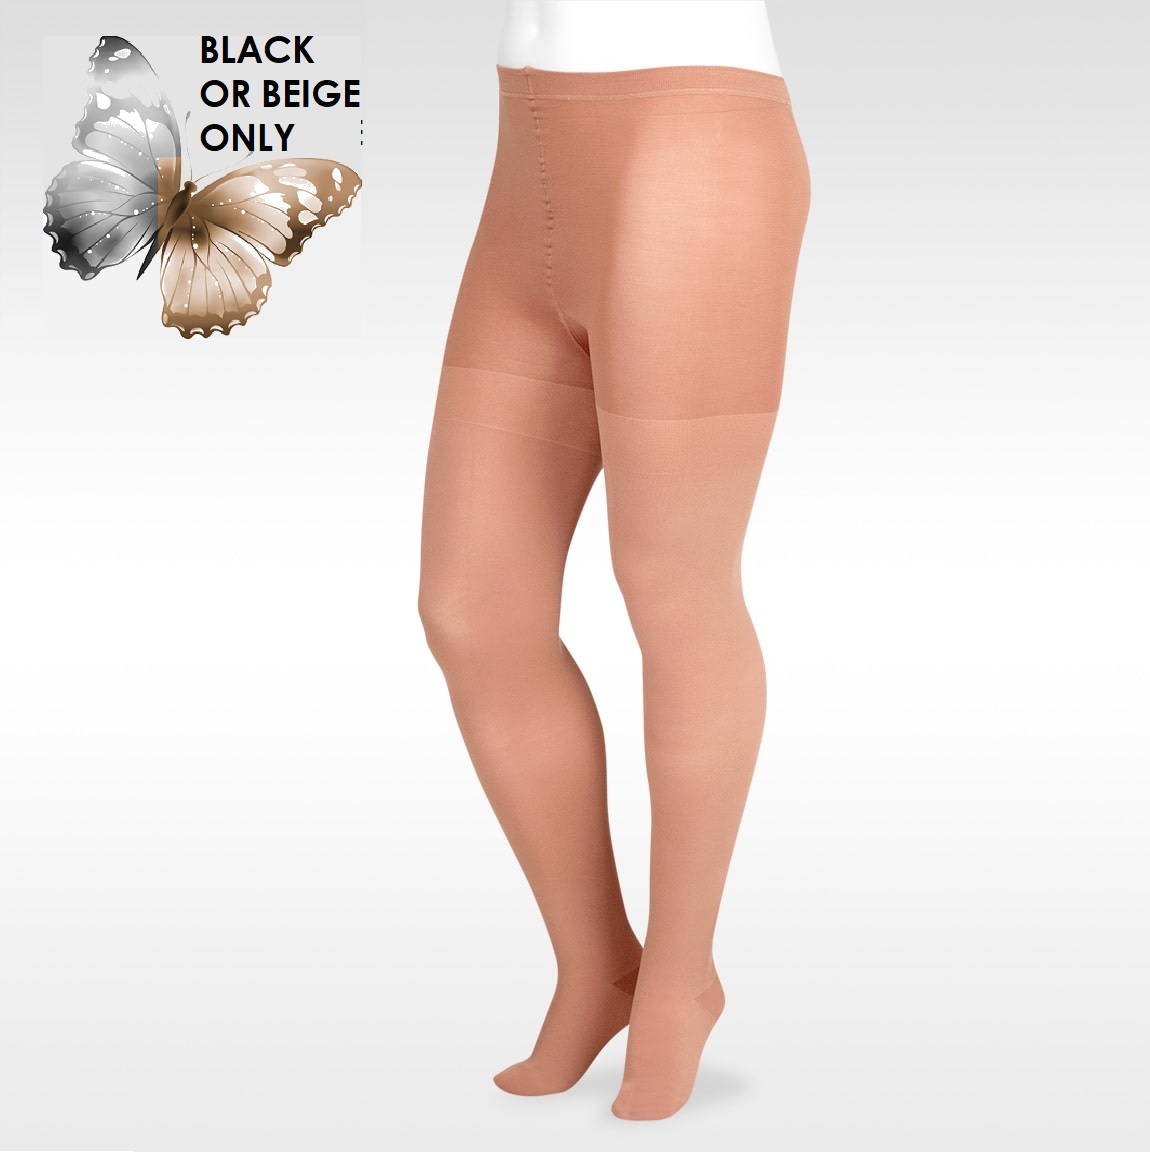 Juzo Soft Thigh High Compression Stockings 20-30/30-40 mmHg